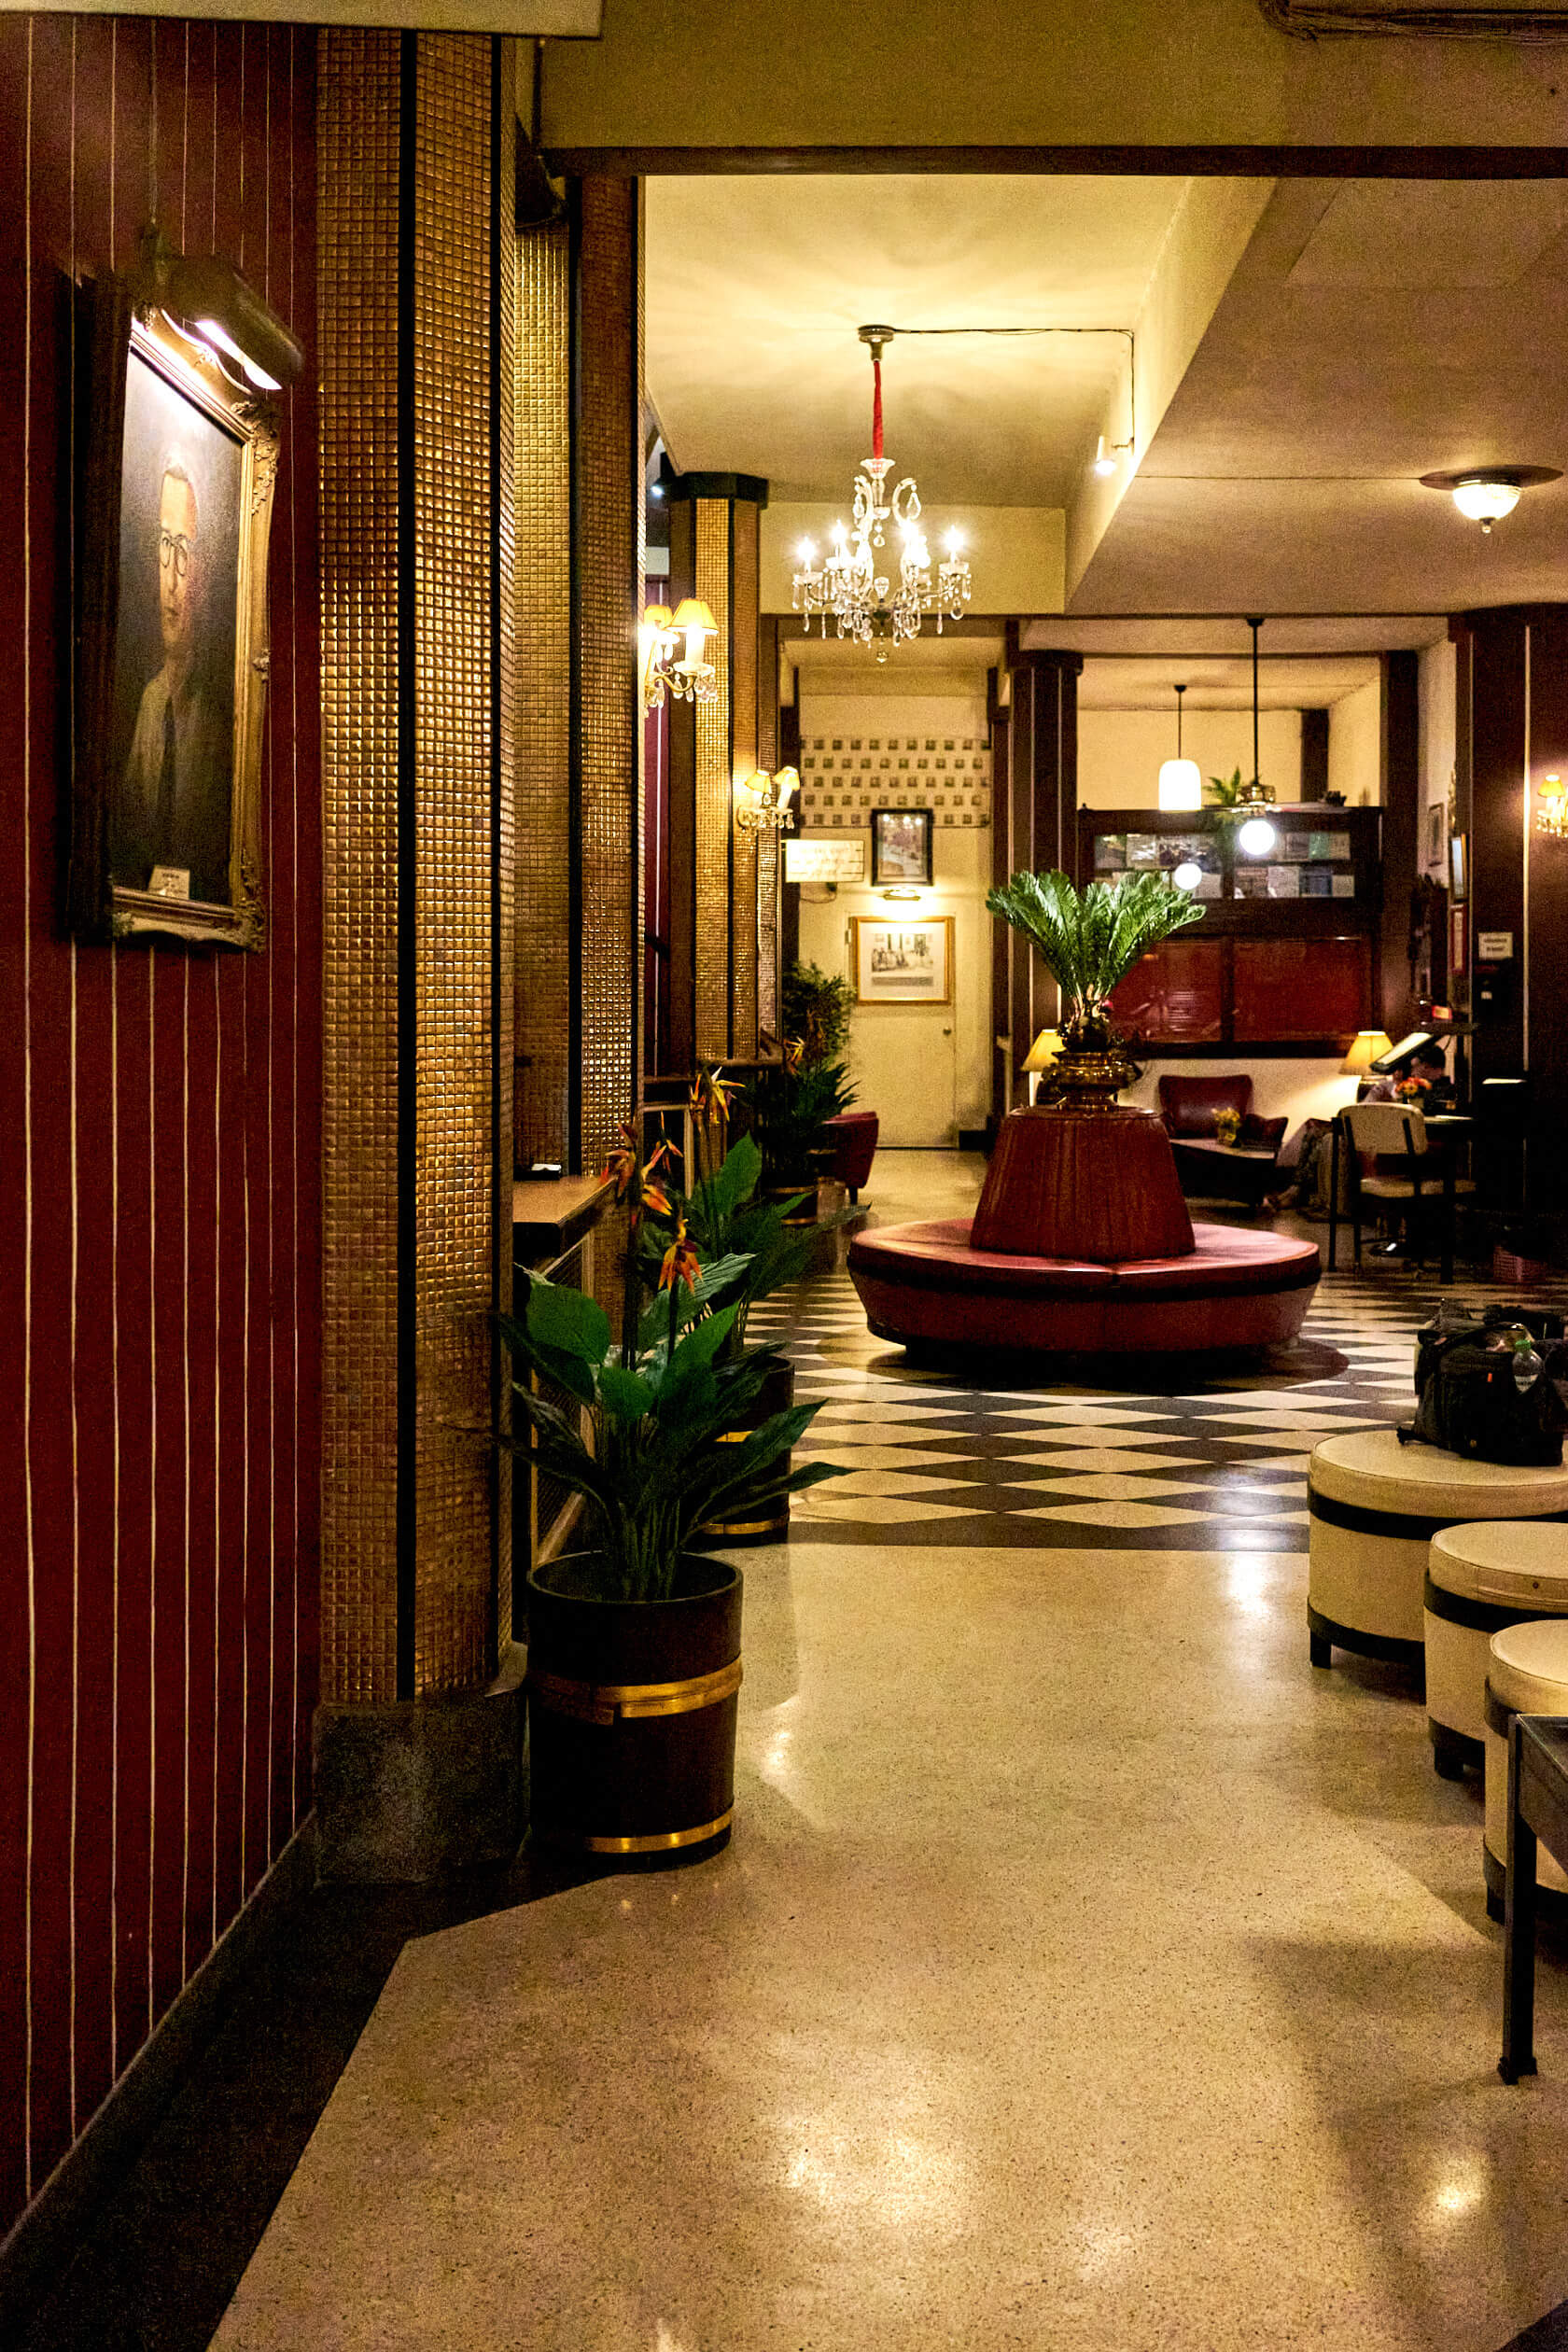 The Atlanta Hotel Bangkok